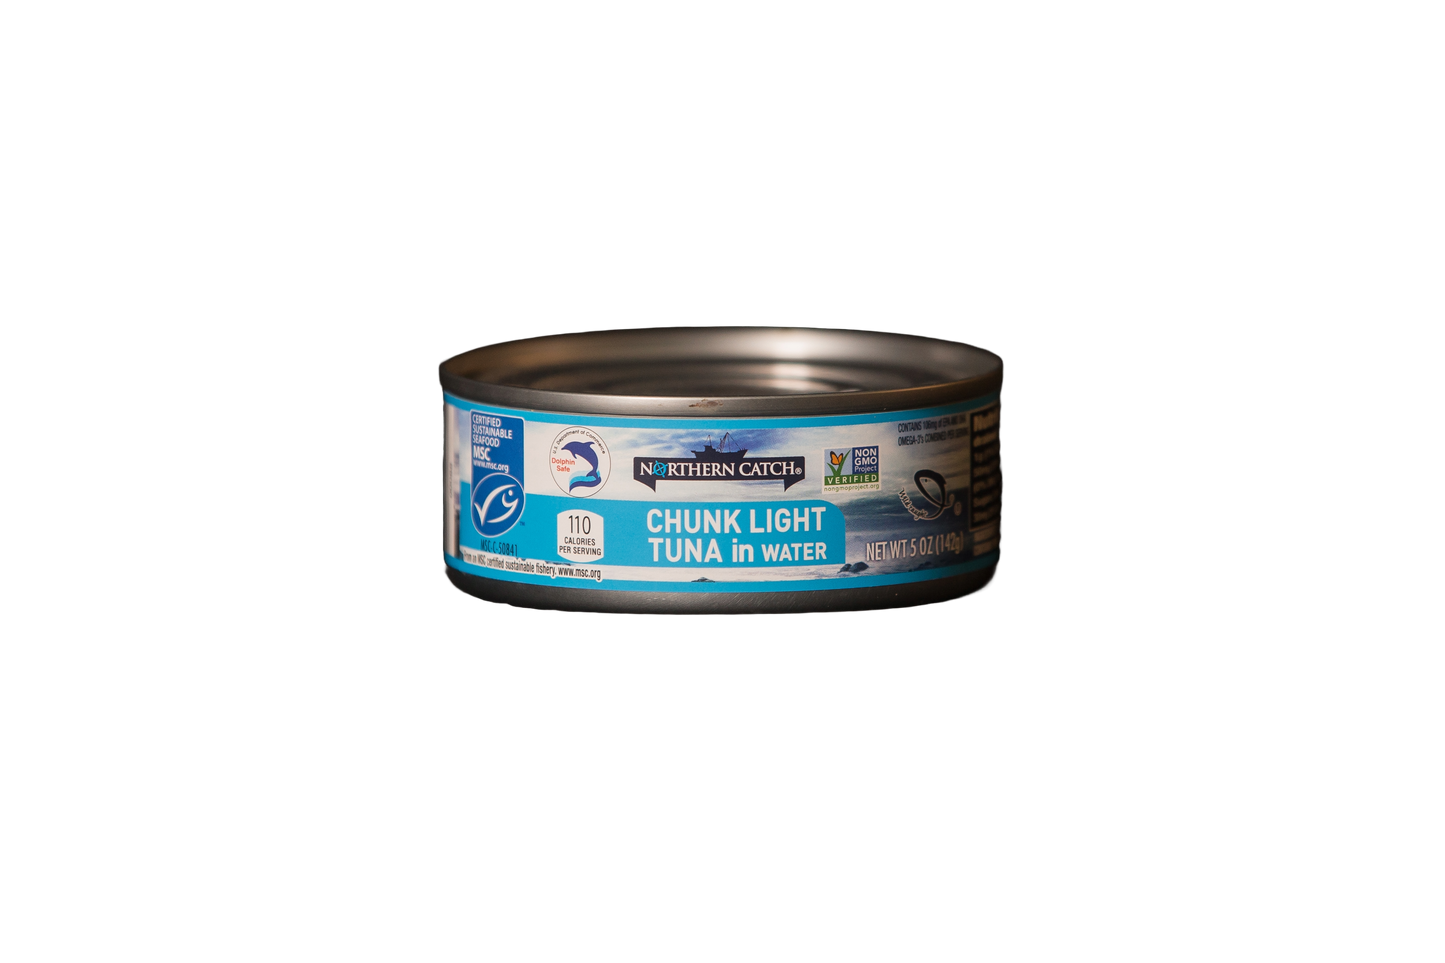 Northern Catch Chunk Light Tuna, 5 oz